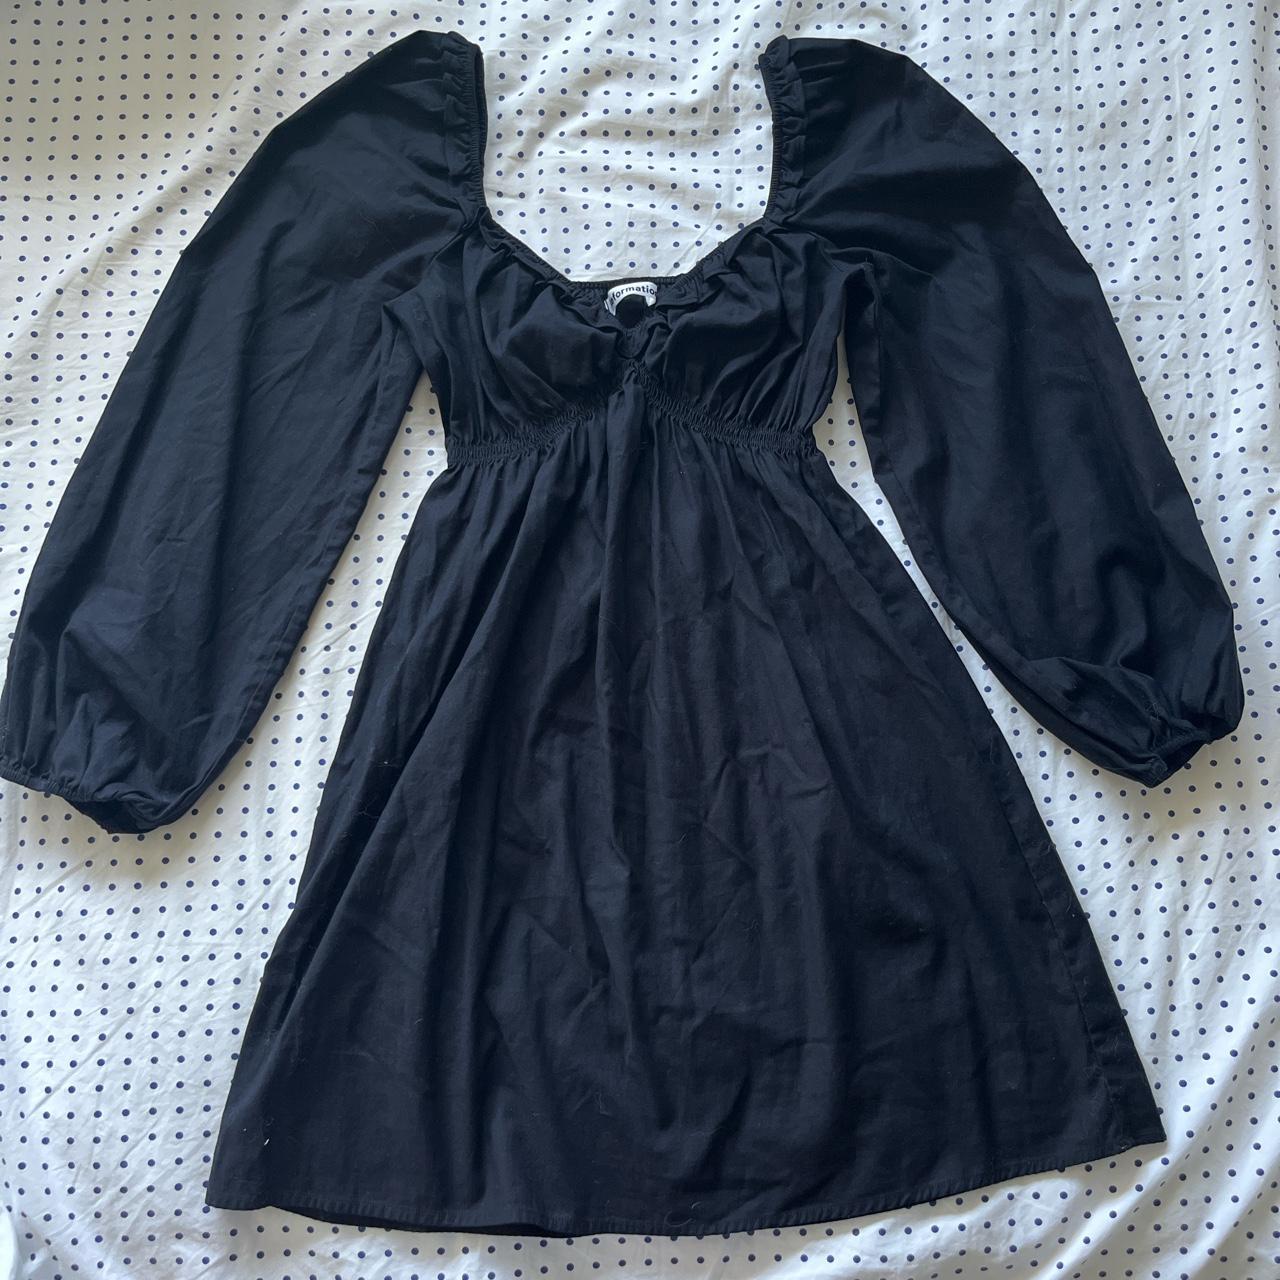 Reformation Women's Black Dress | Depop